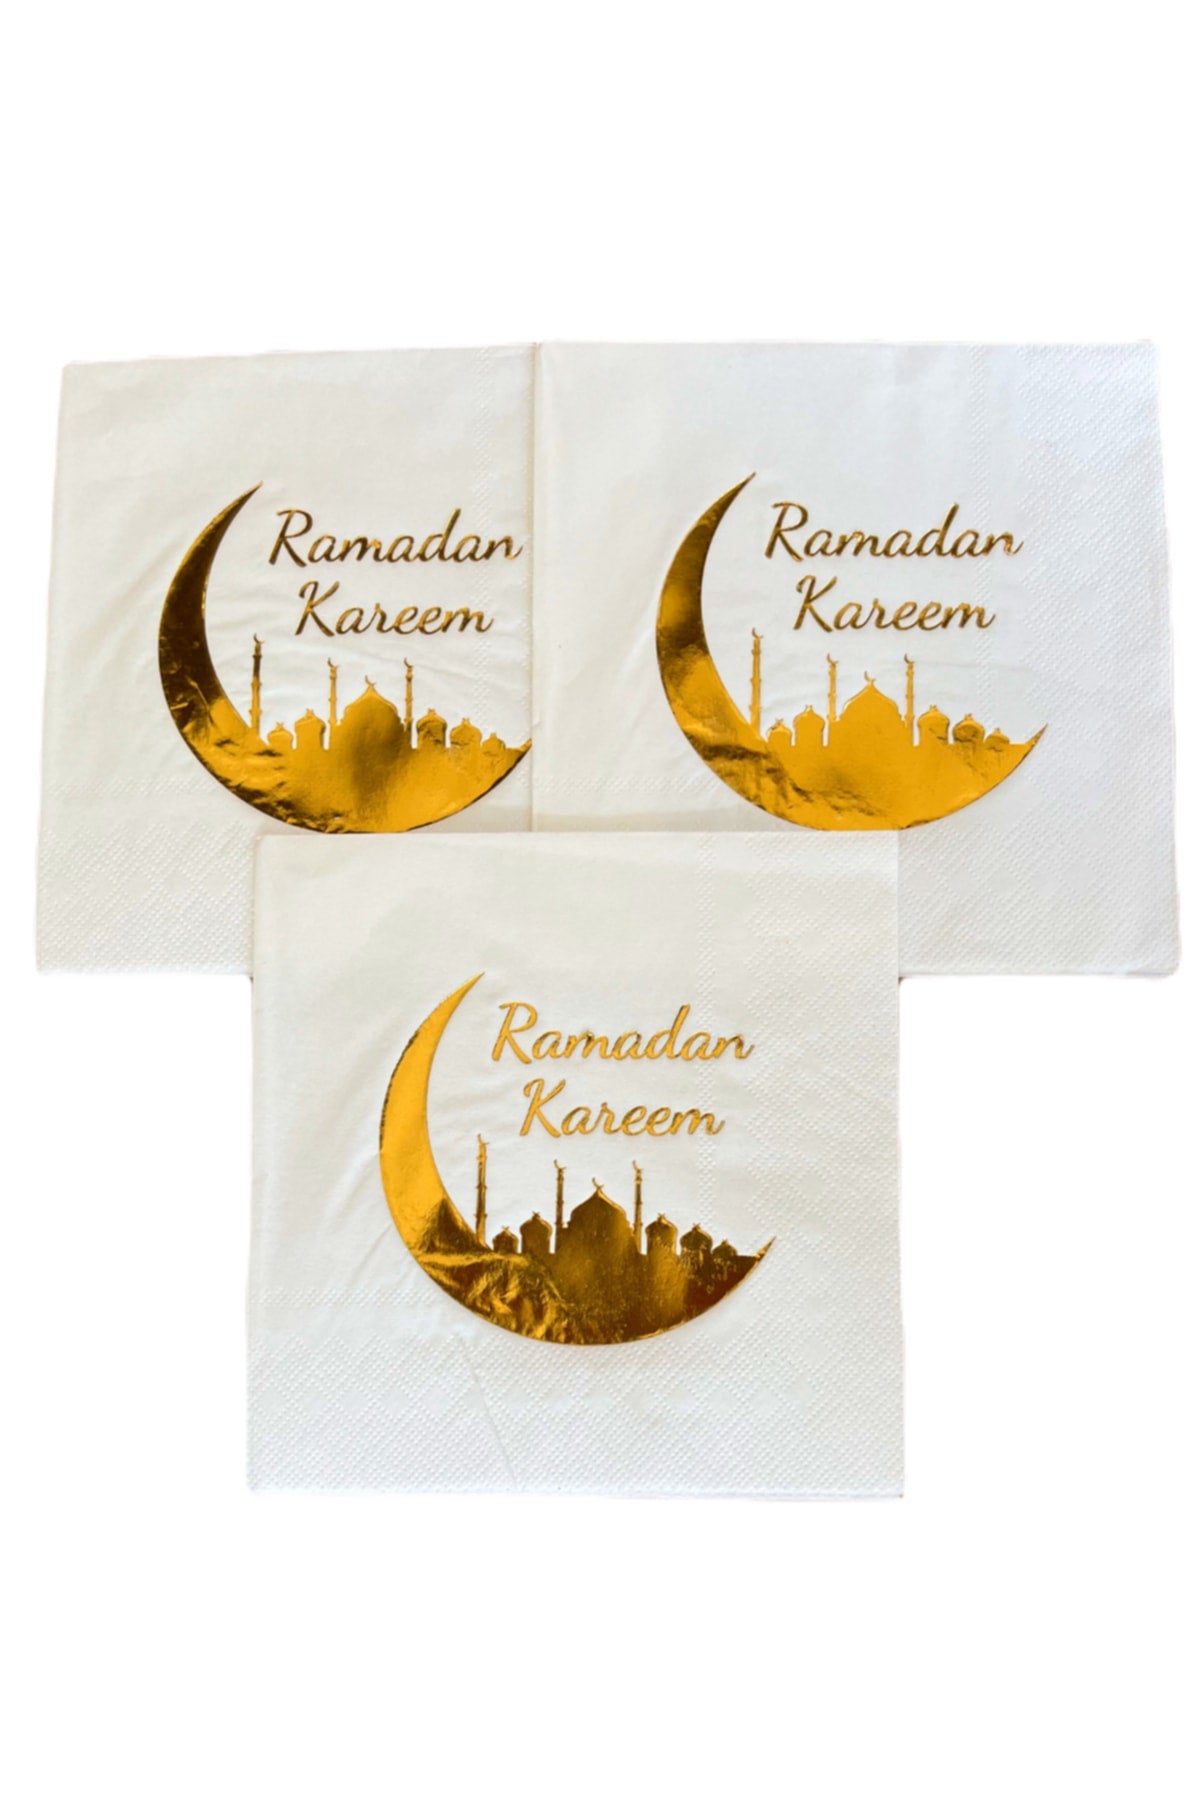 Huzur Party Store Ramadan Kareem Gold Gilded Napkin 16 Pcs 16x16 Cm Gold Leaf Ramadan Bayram Themed Religious Ornament HZRRAMAZANPECETE